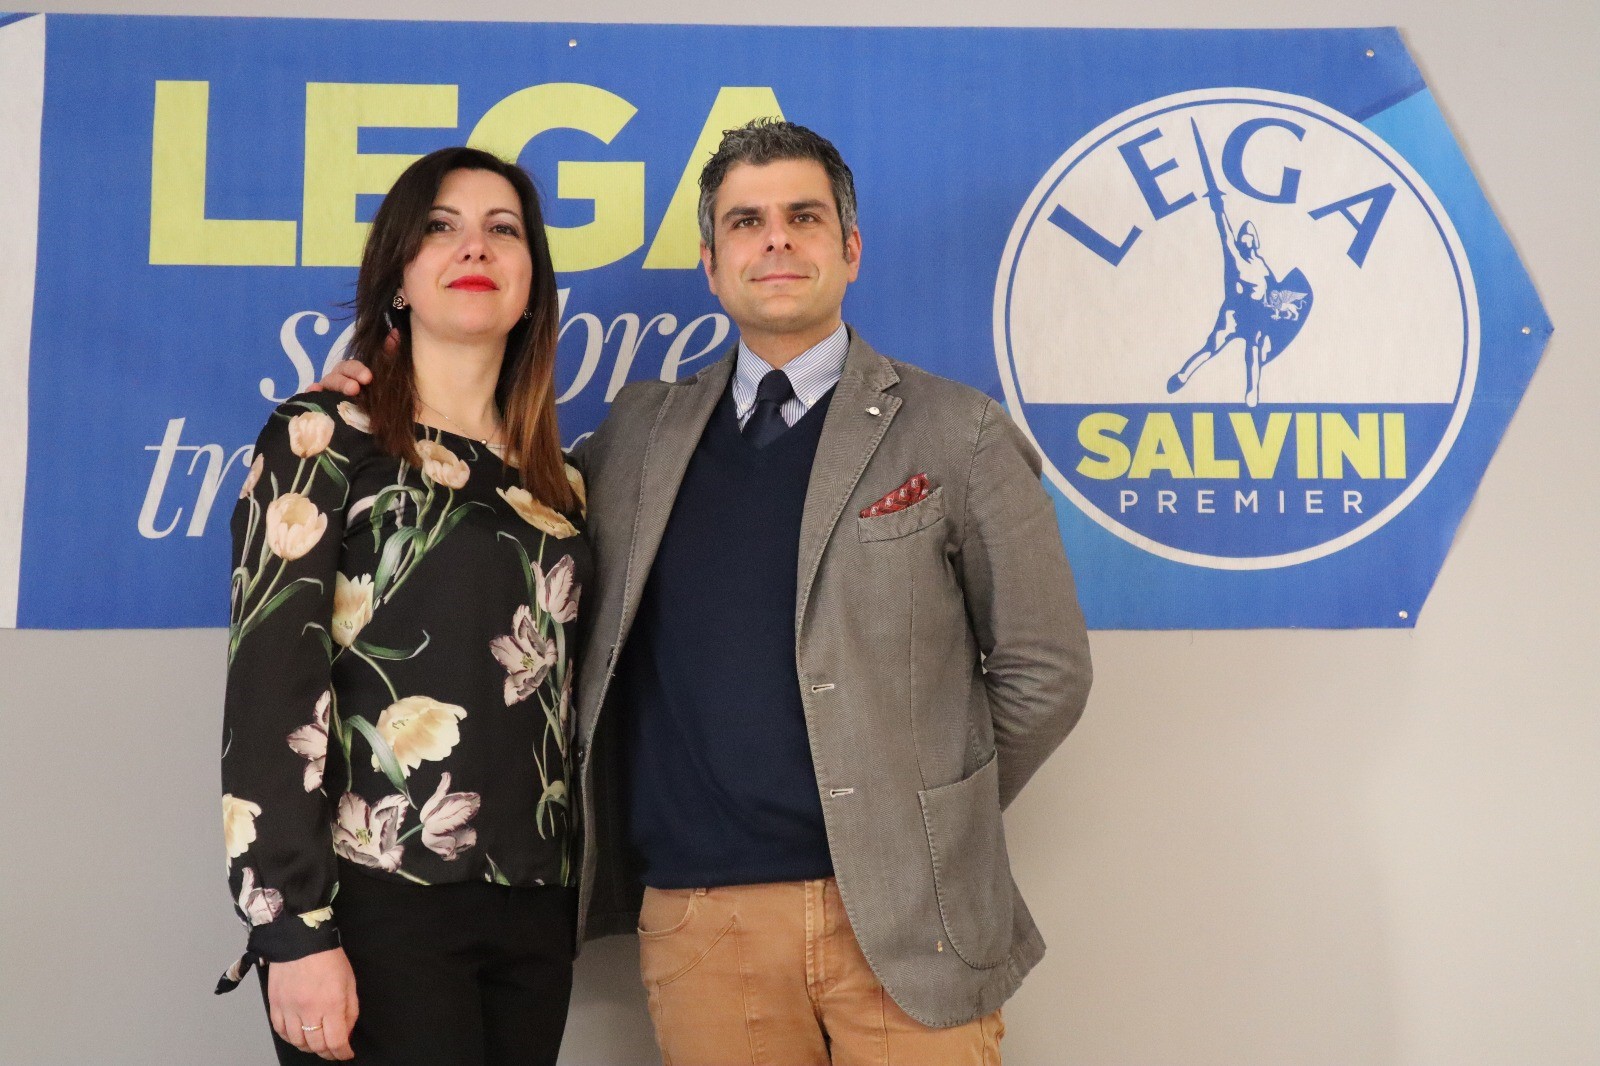 Benevento| Lega Salvini Premier: Nadia Sgro candidata sannita alle Europee 2019